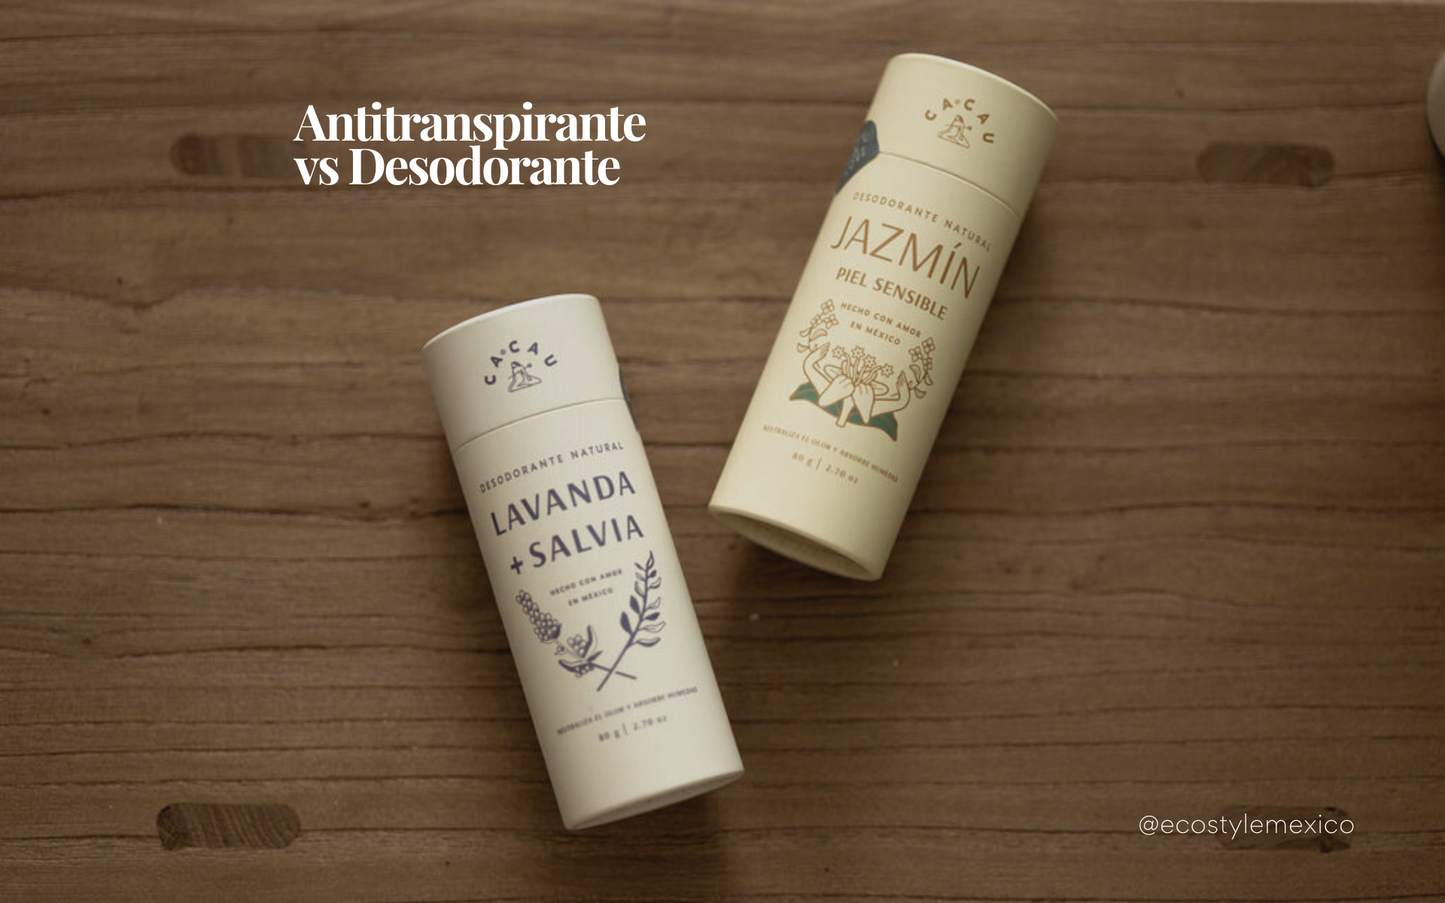 Antitranspirante vs Desodorante